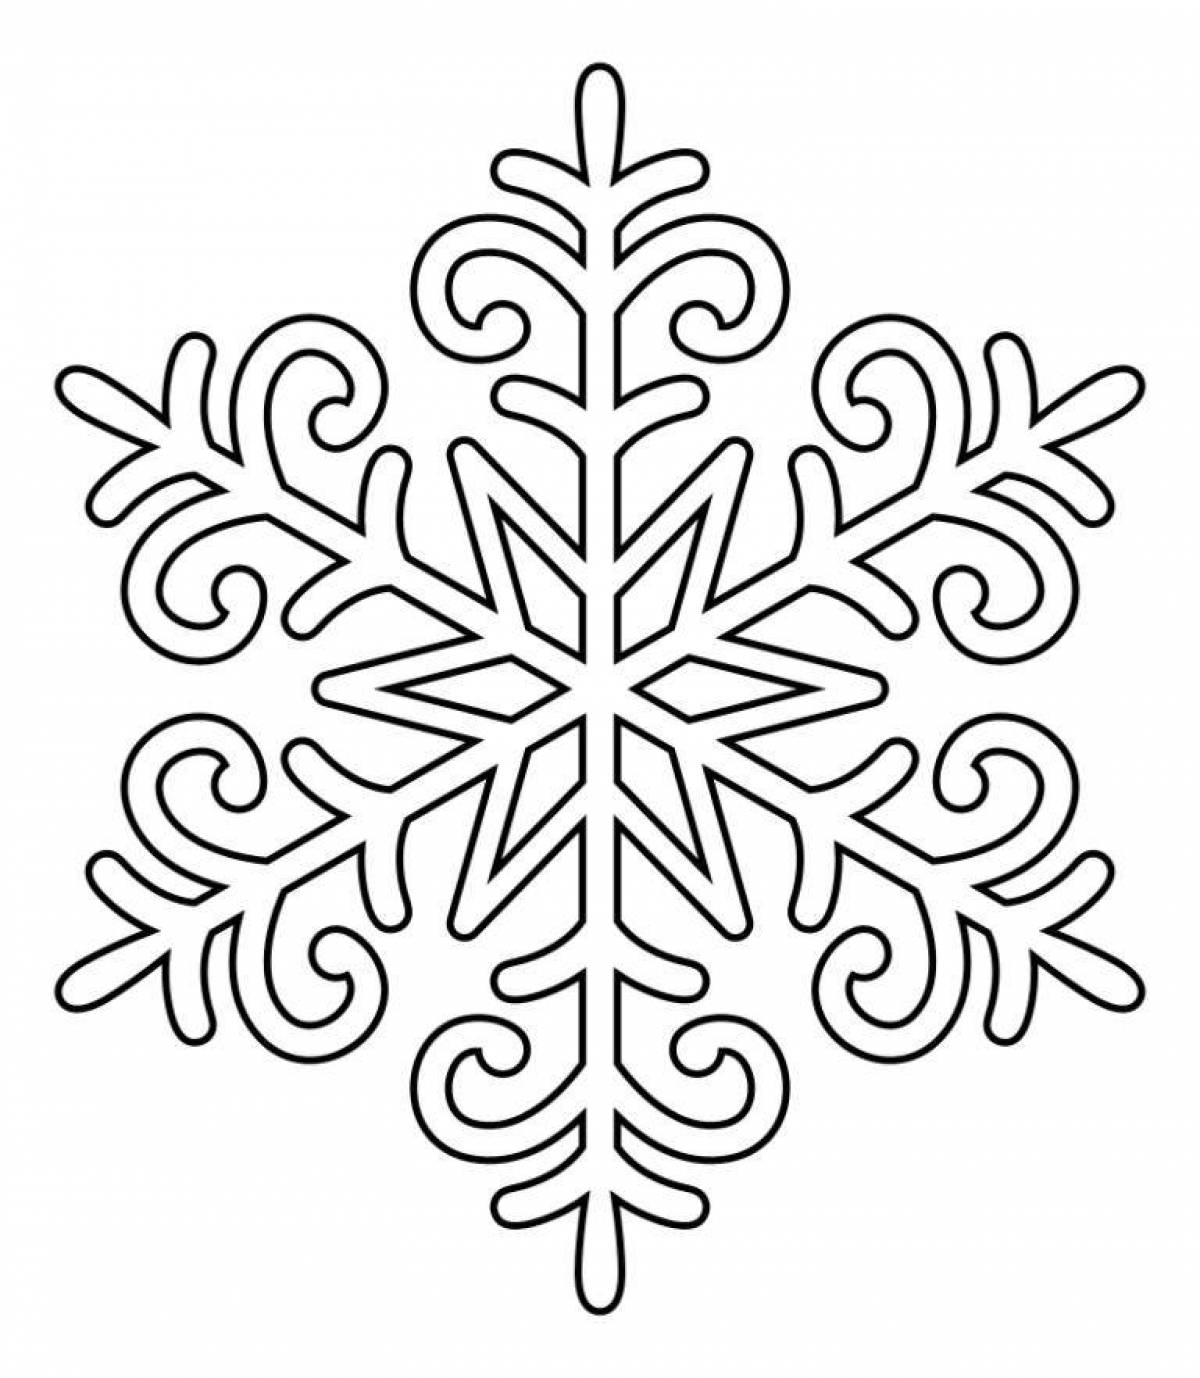 Coloring snowflake